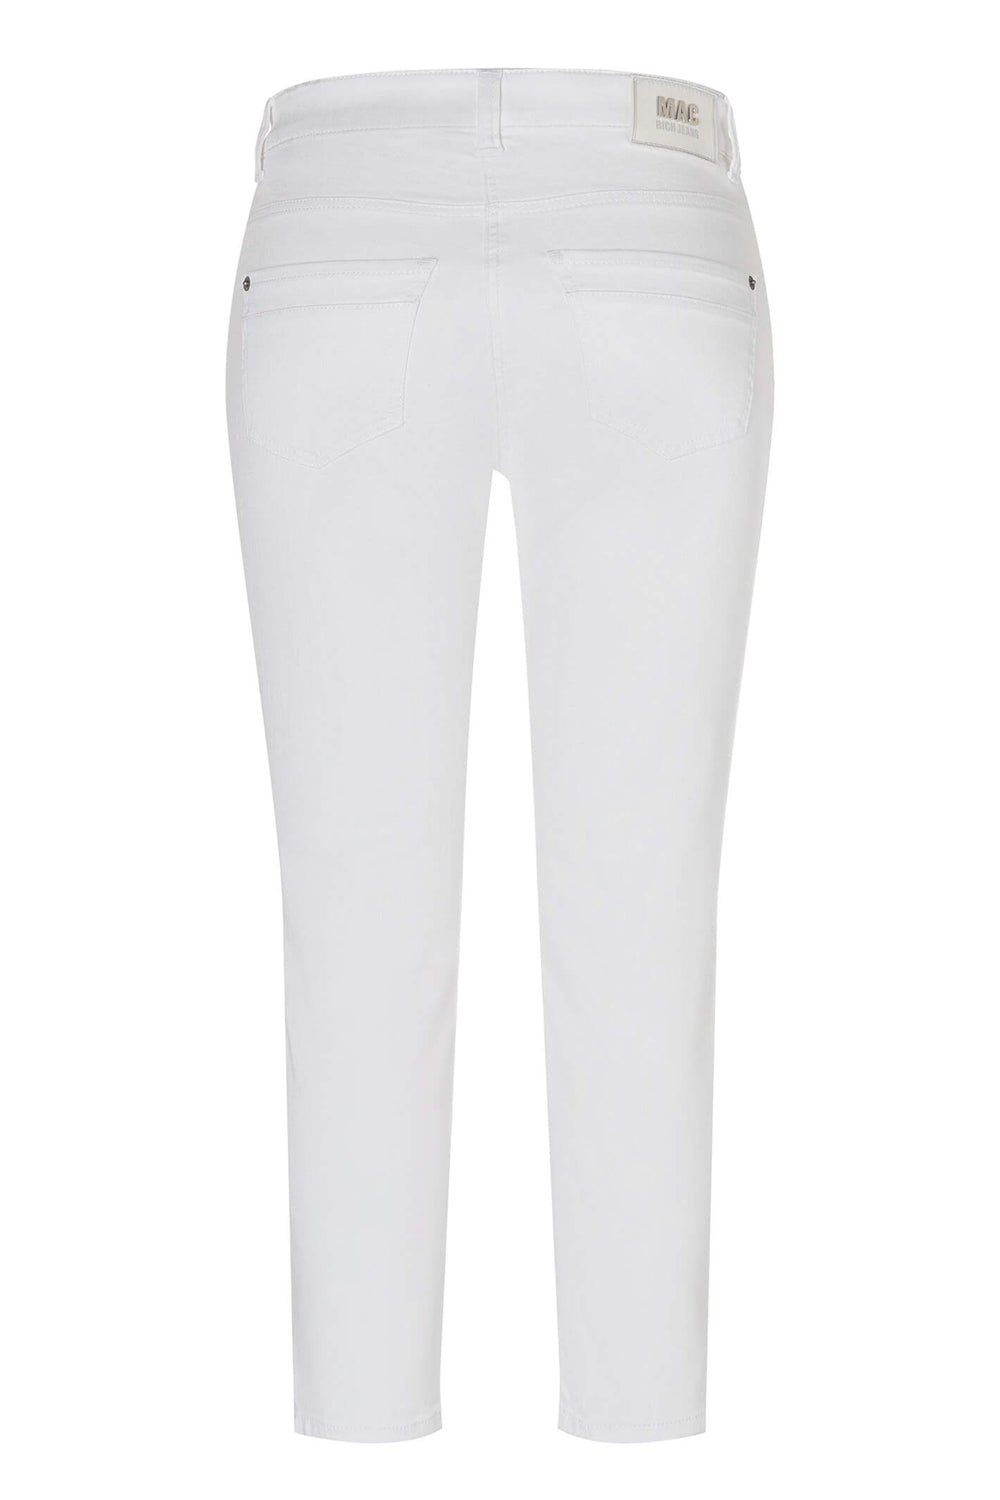 MAC Rich Slim Chic 5755-90-0389L D010 White Denim Jeans - Olivia Grace Fashion